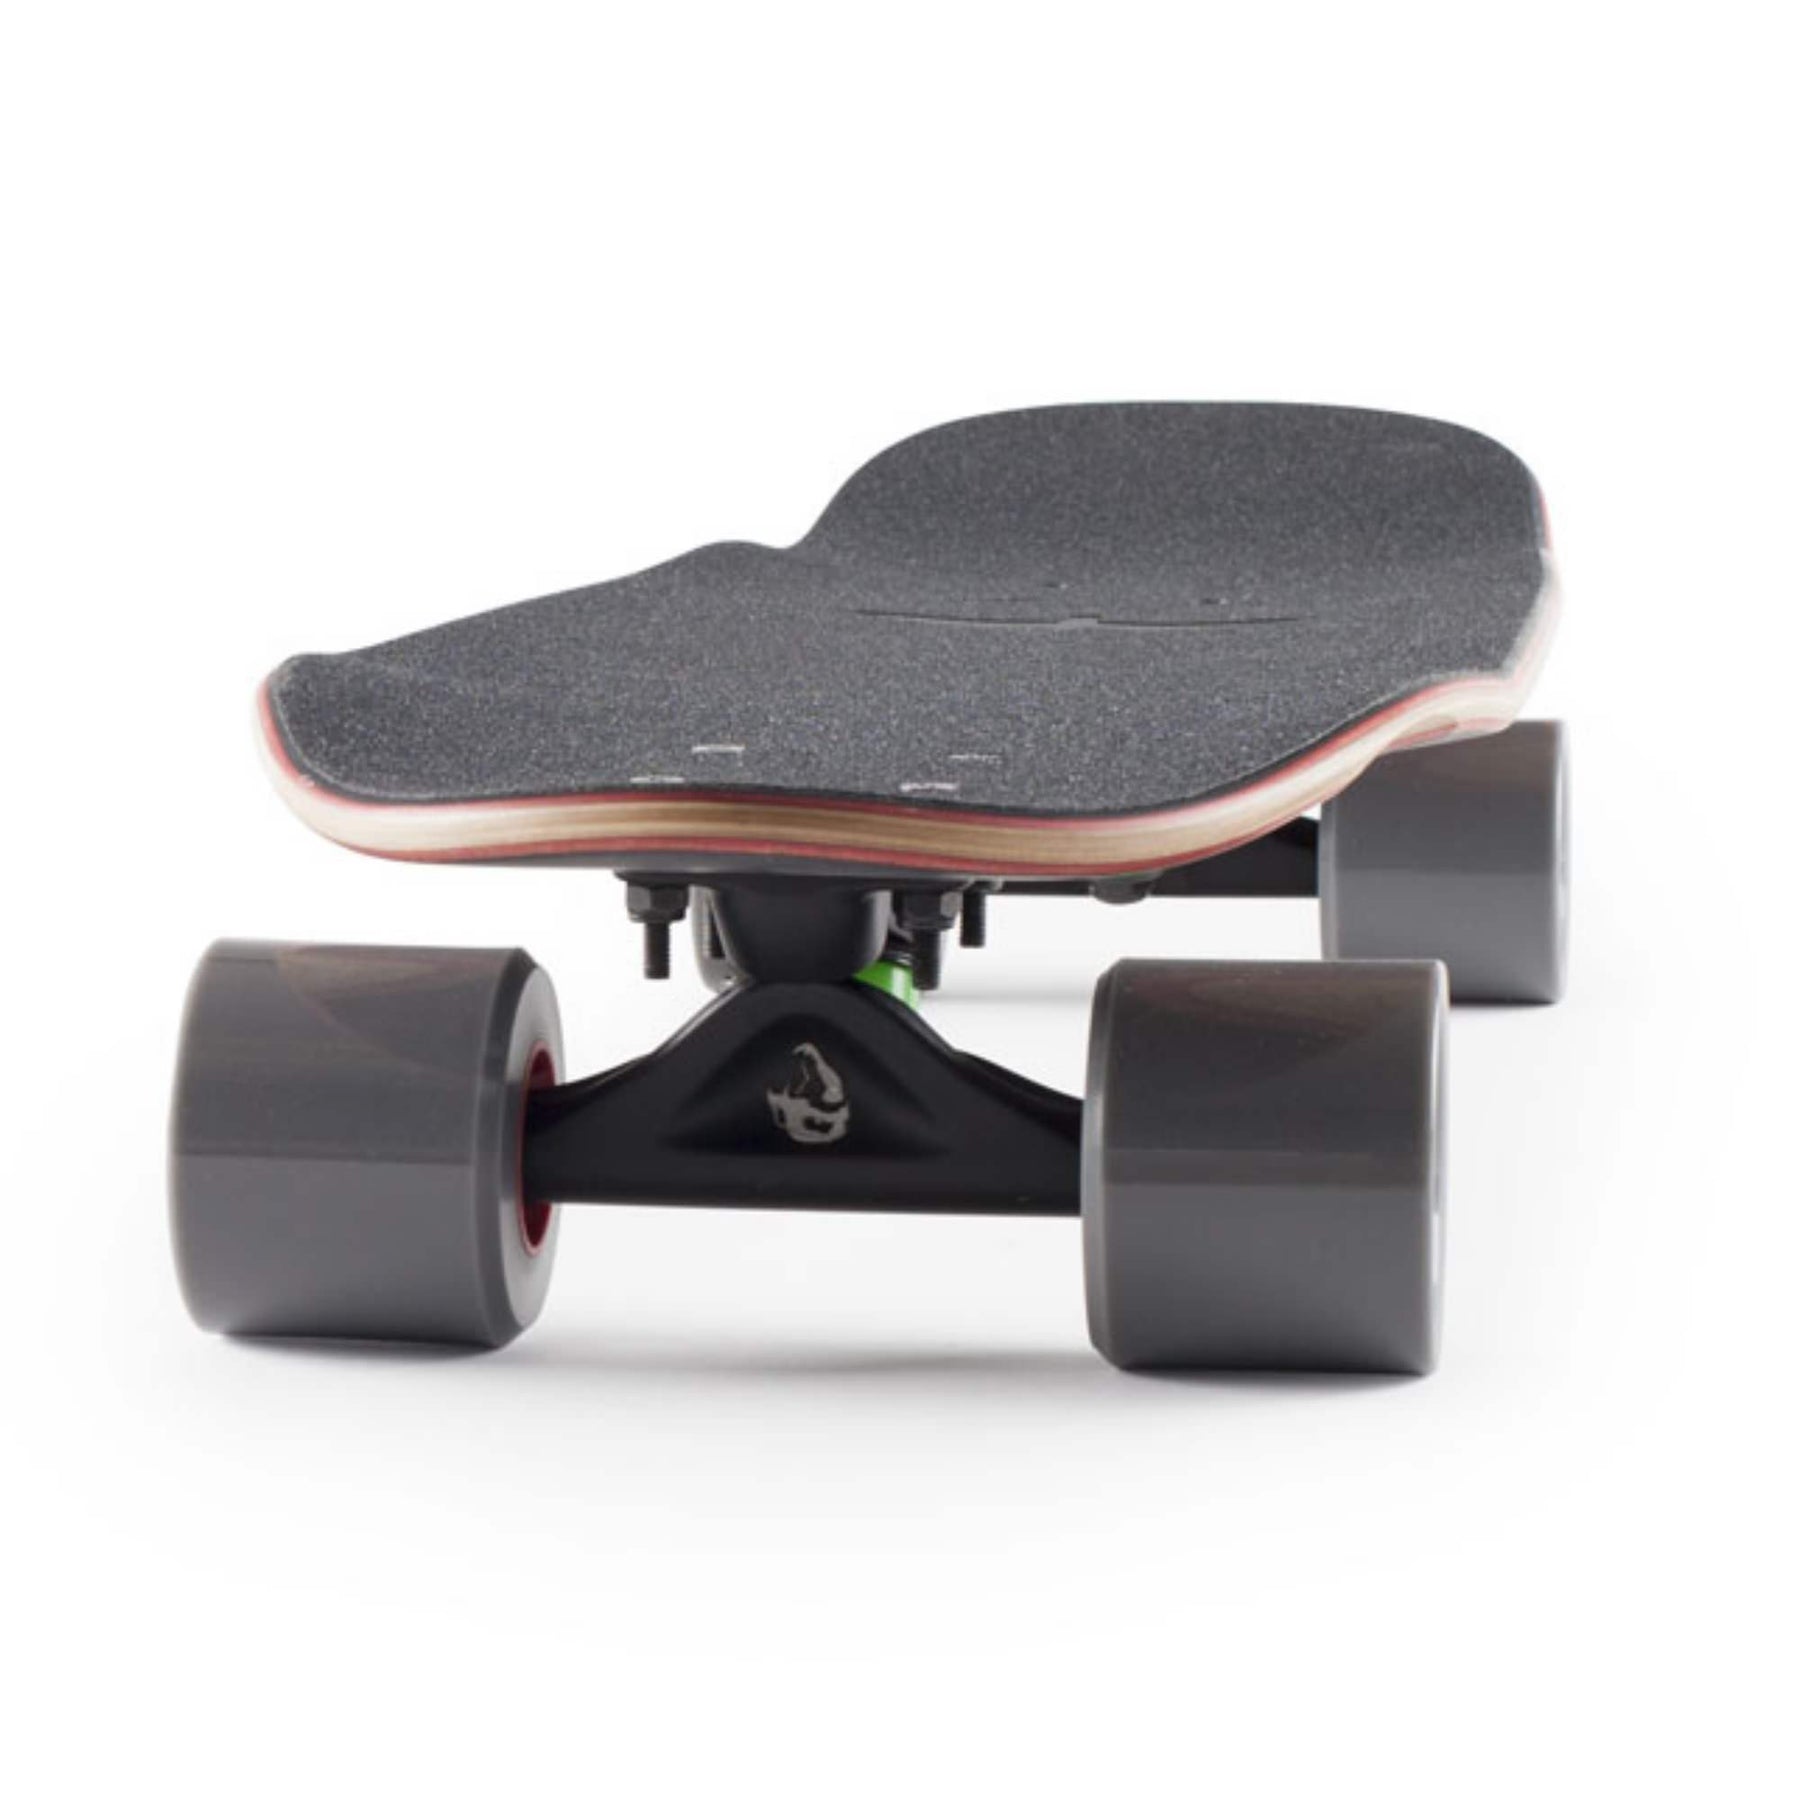 Landyachtz Dinghy Series Skateboard, Turbo Complete with Blue Wheels